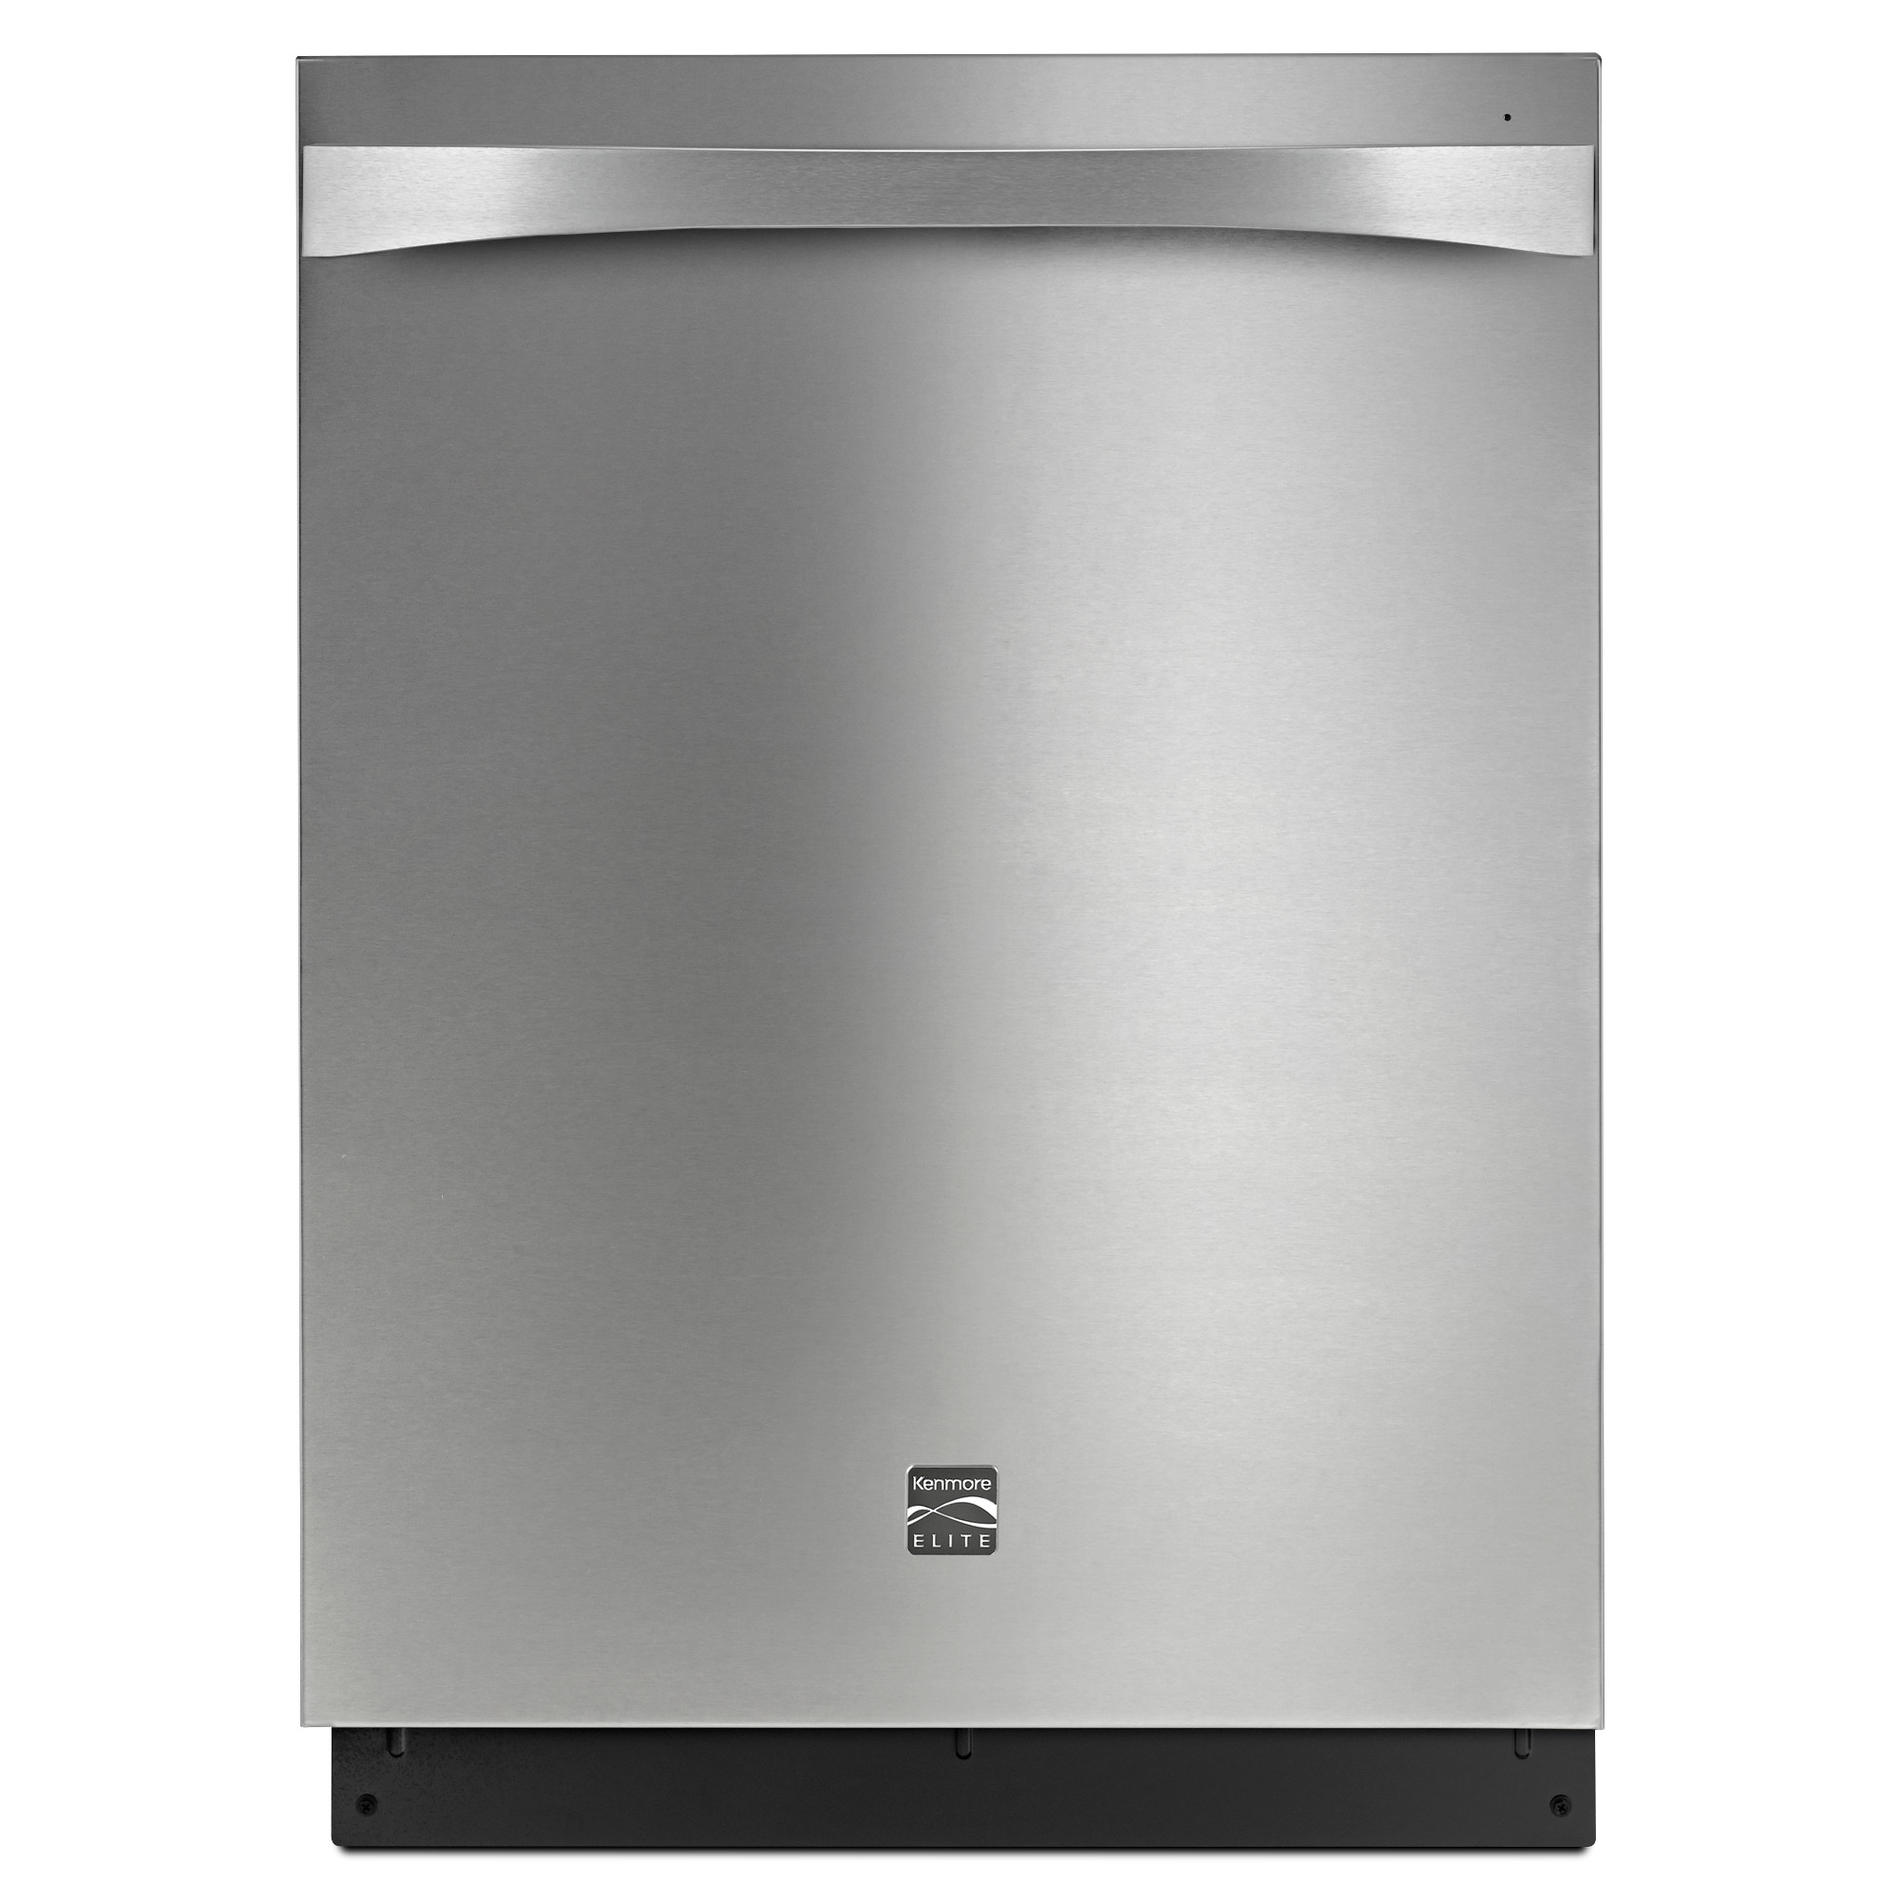 Kenmore Elite Kenmore Elite 14793 Dishwasher w/Turbo Zone Reach/360 Power Wash - Stainless Steel